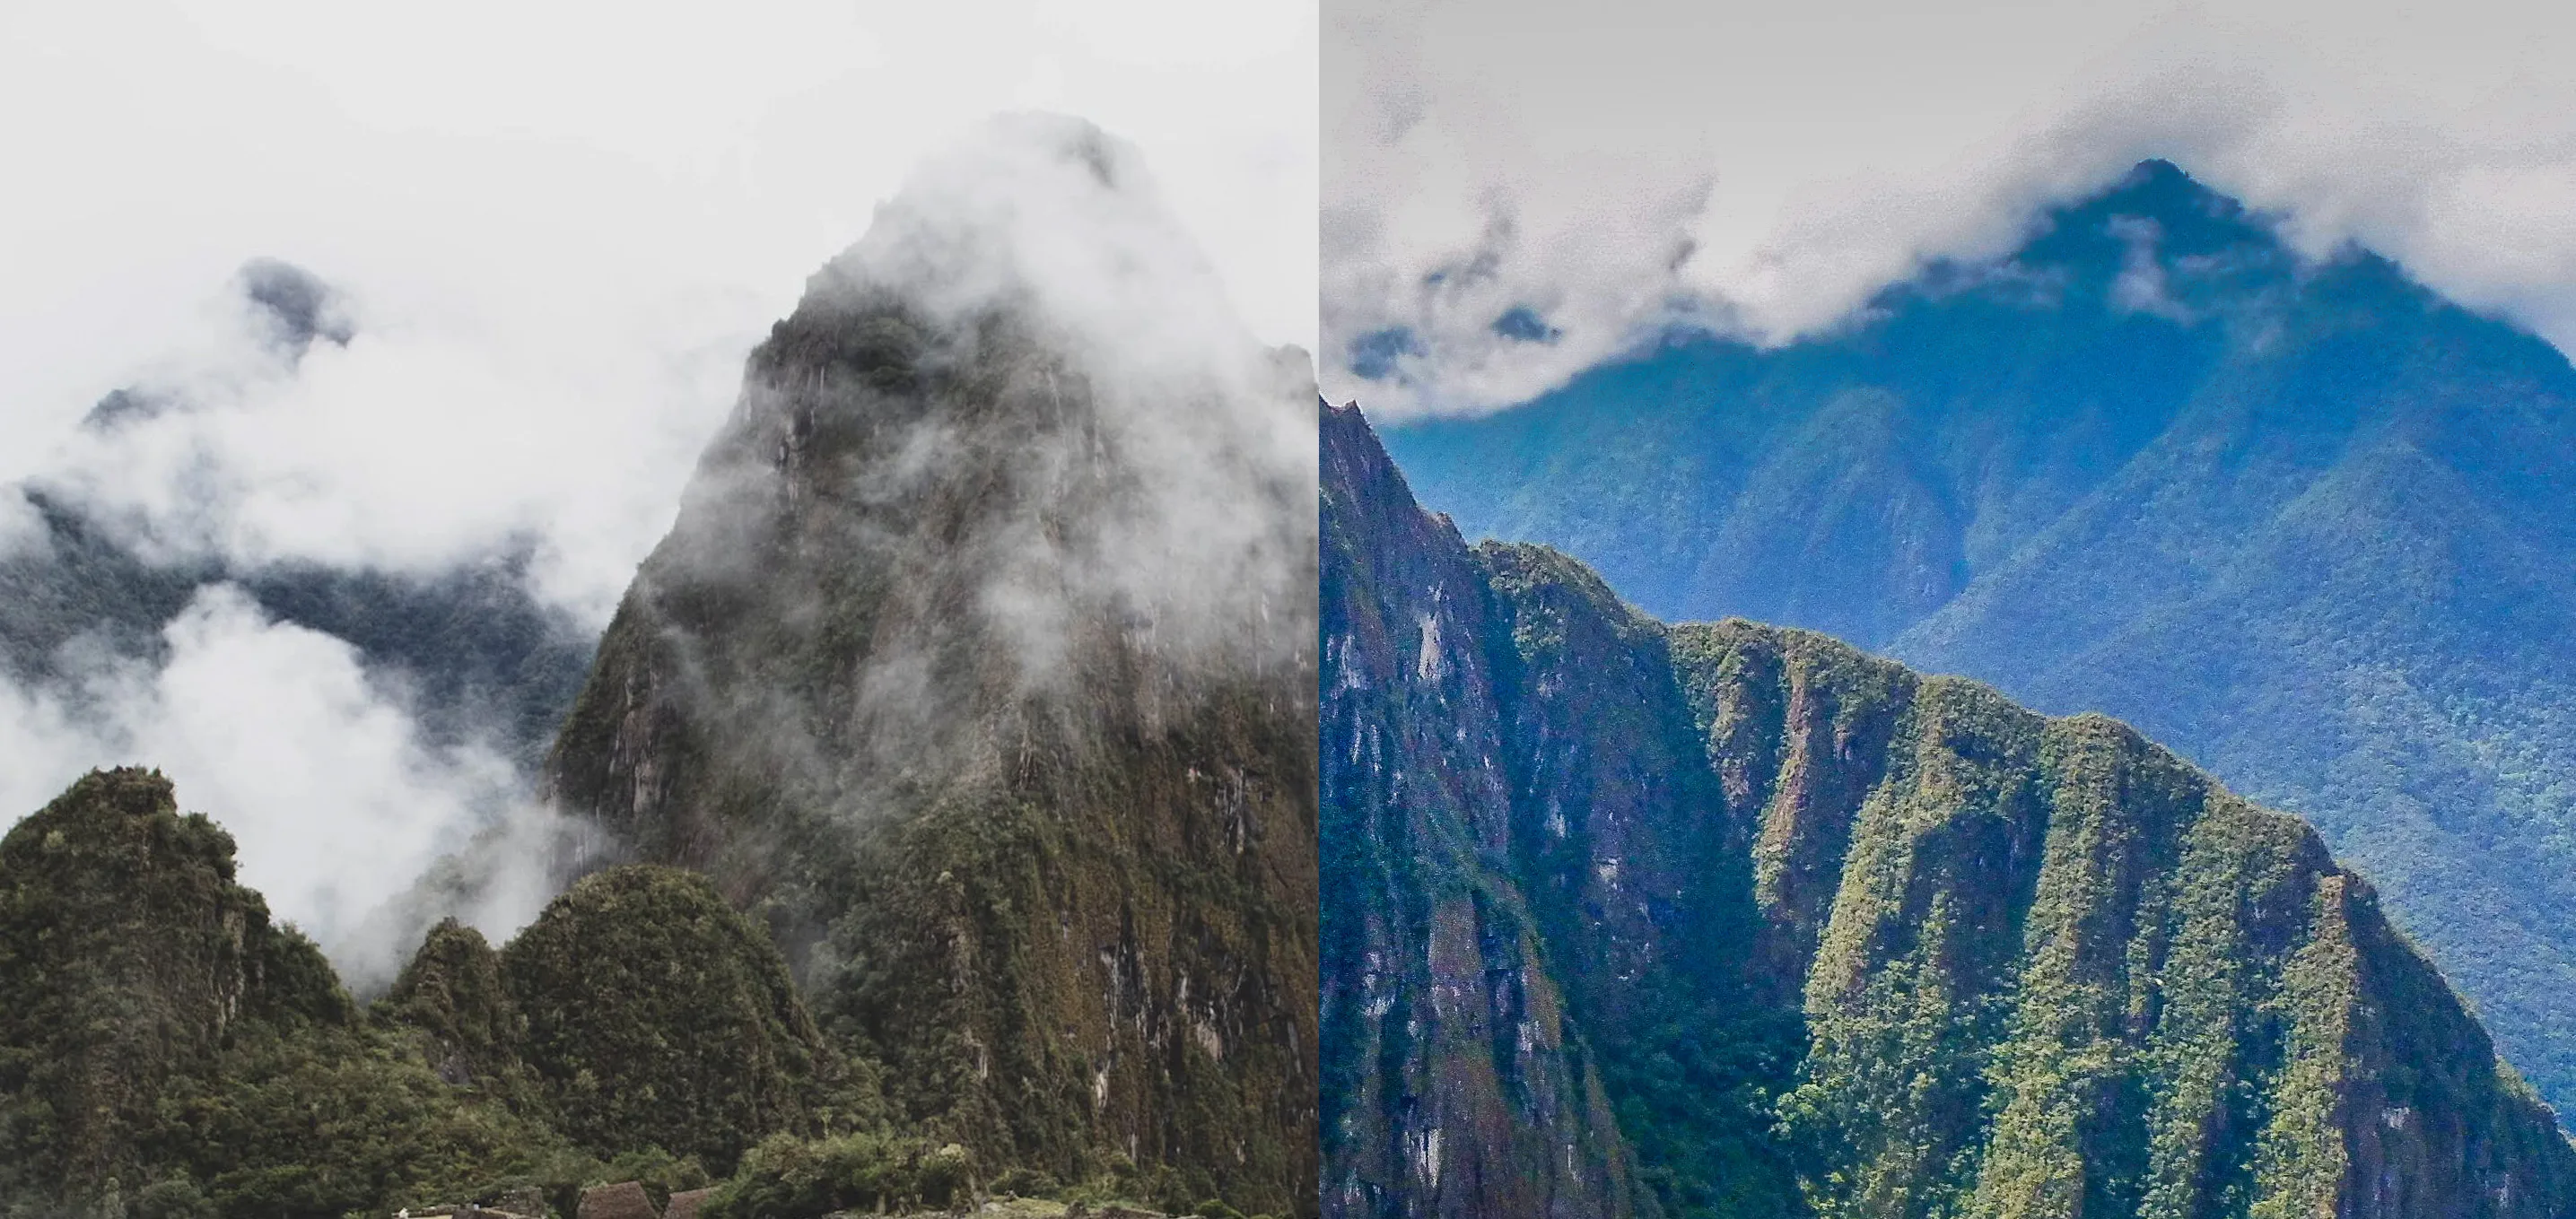 Machu Picchu seasons in the year